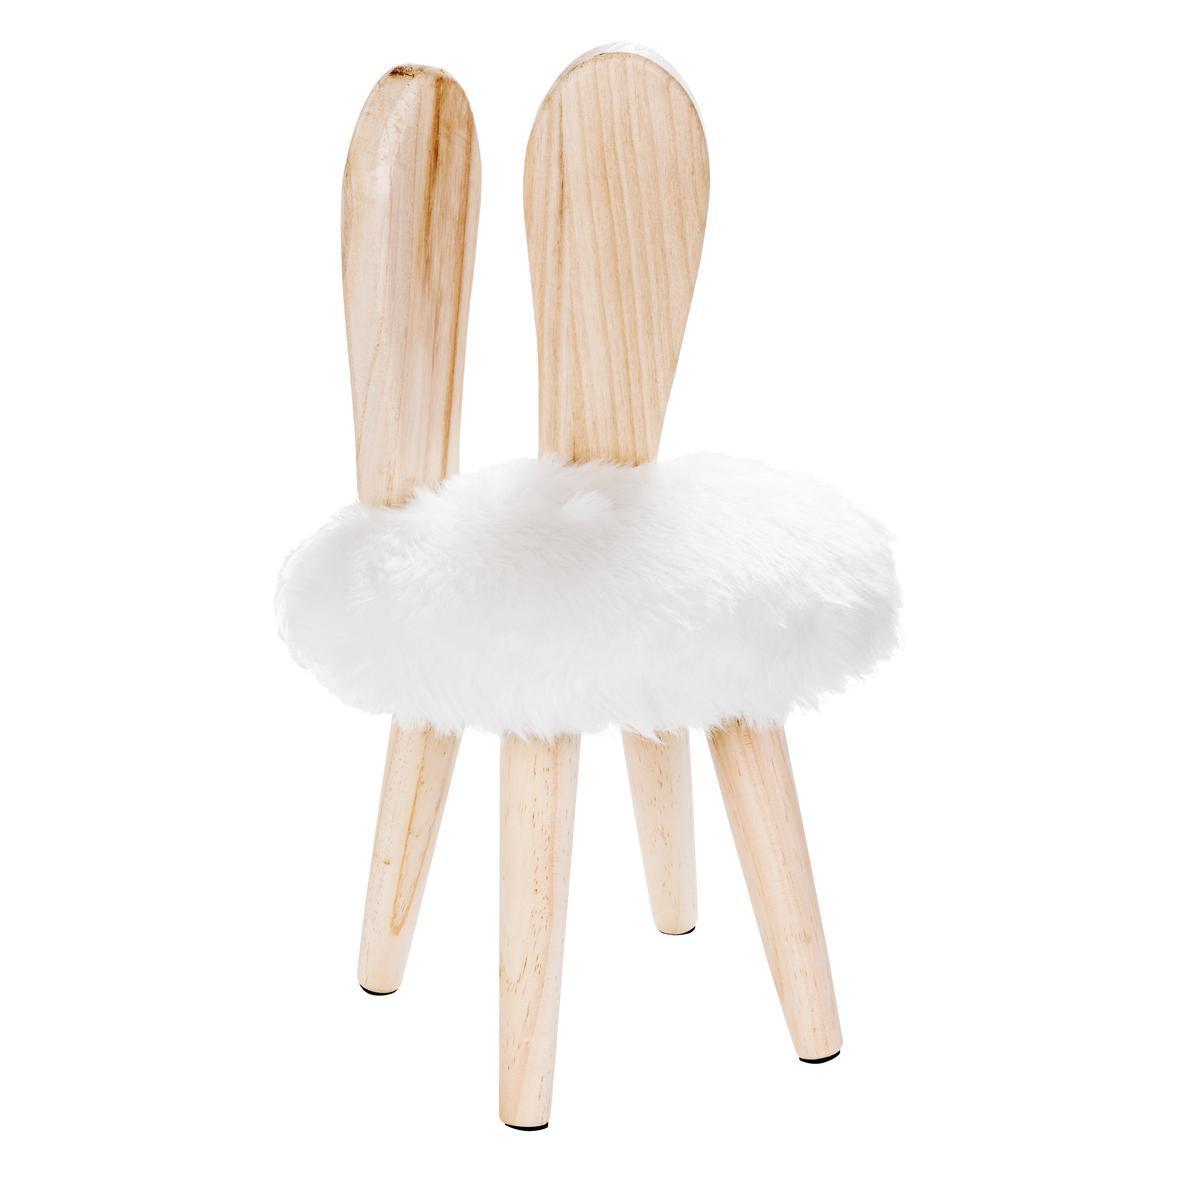 Chaise enfant lapin - ø 30 x H 45 cm - Marron, blanc - MINI K.KOON